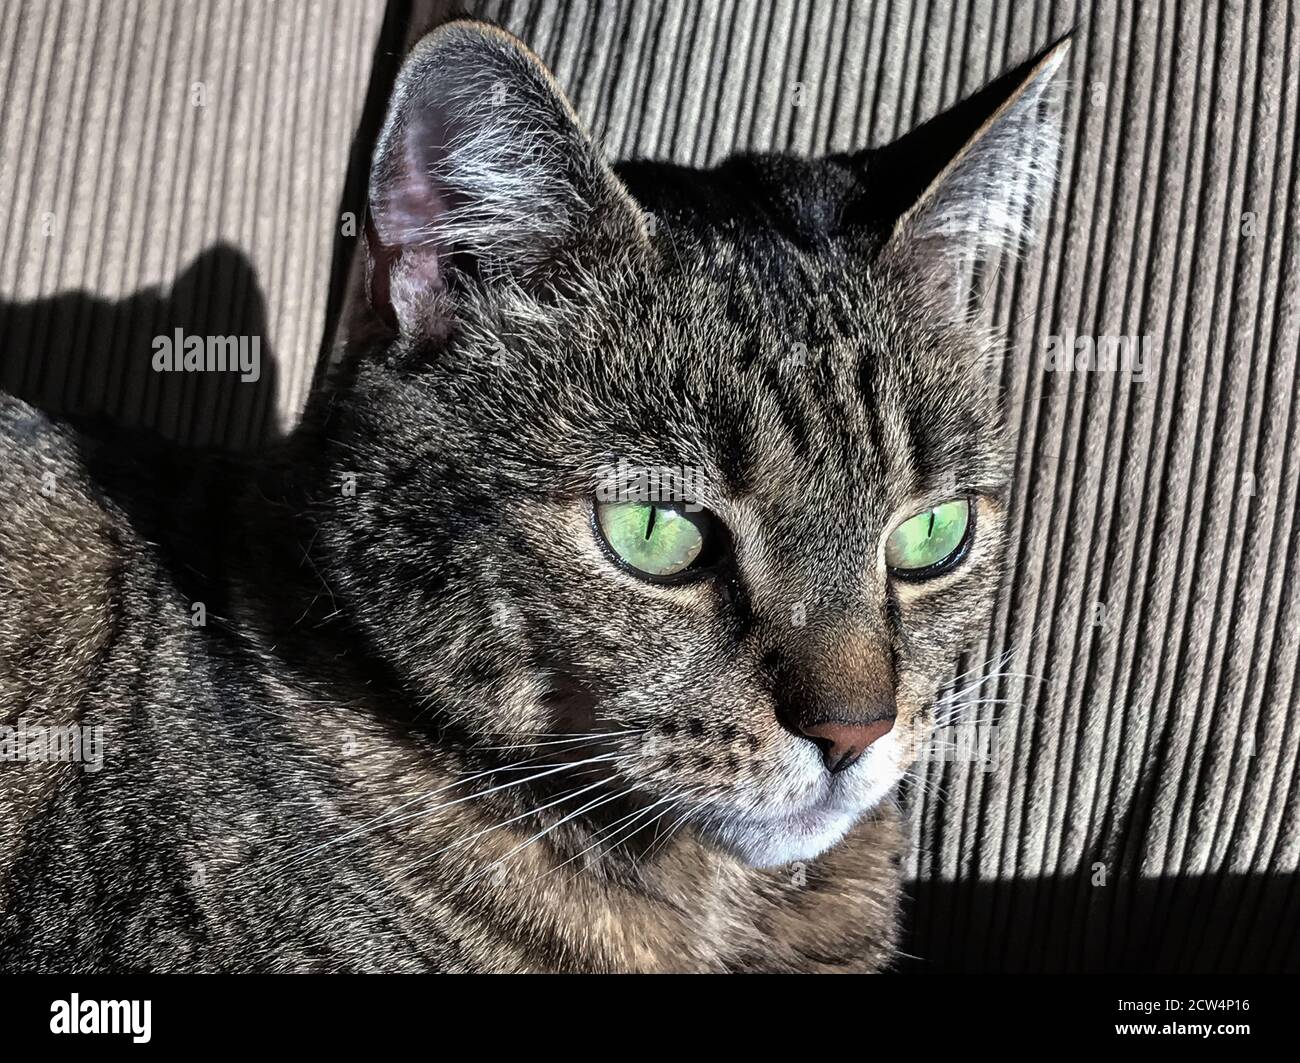 Retrato de un gato tabby con ojos verdes. Foto de stock